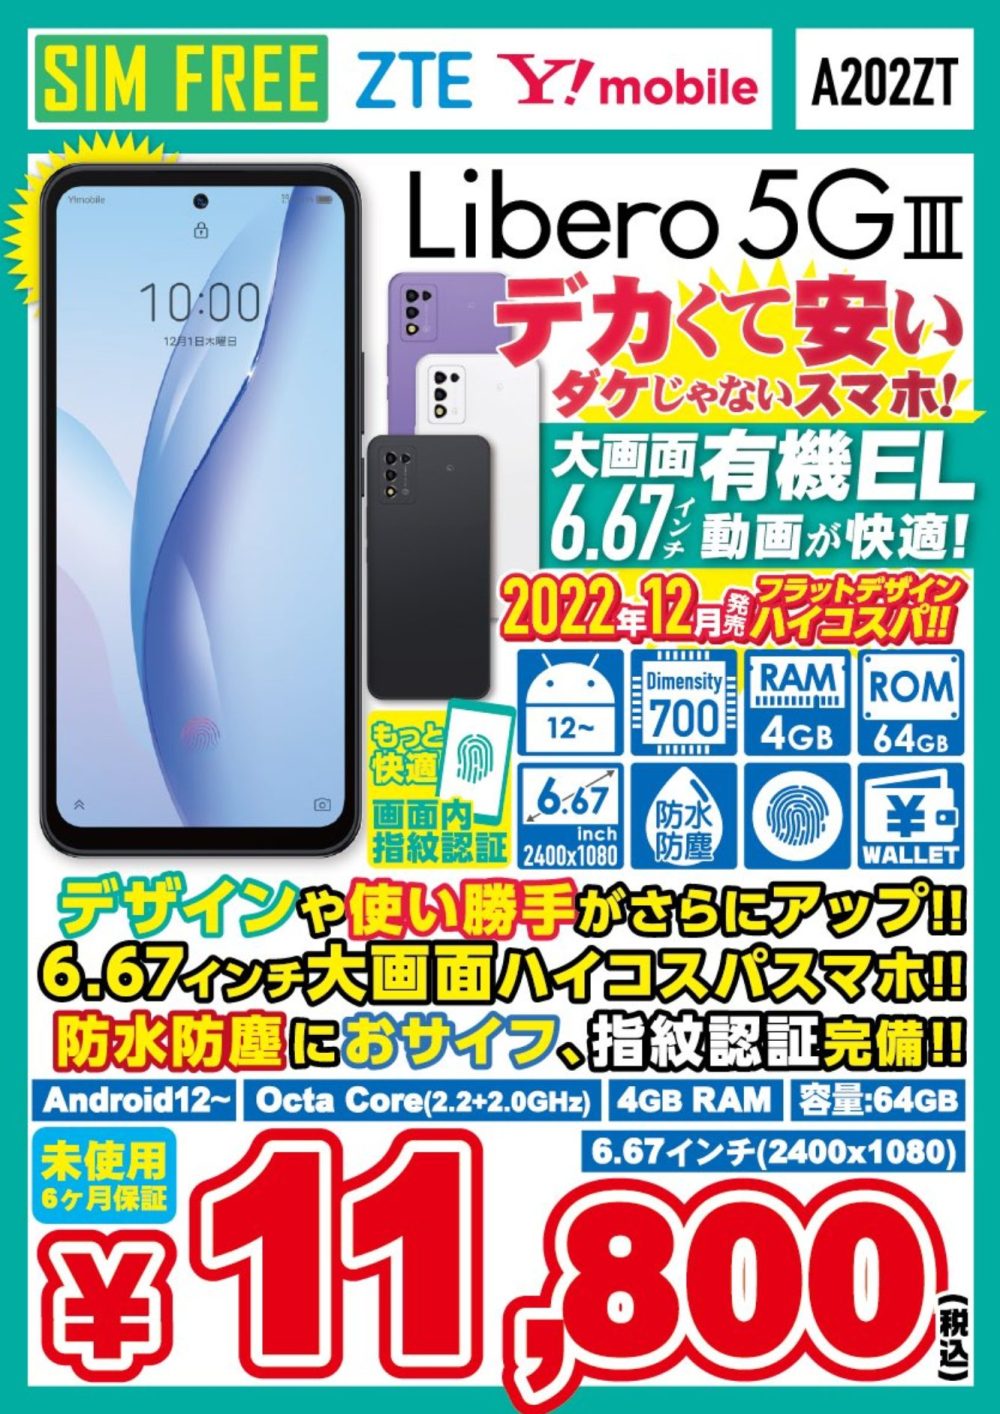 ZTE「Libero 5G III」未使用品11,800円で販売中！【6.67インチ大画面 